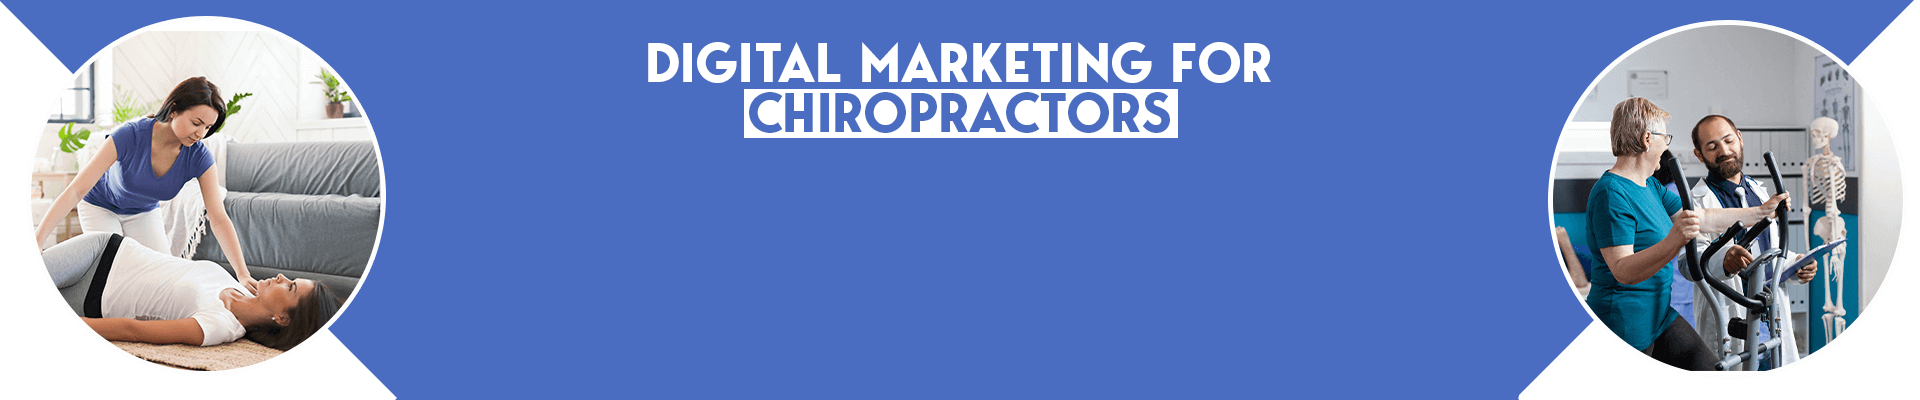 Chiropractors digital marketing services